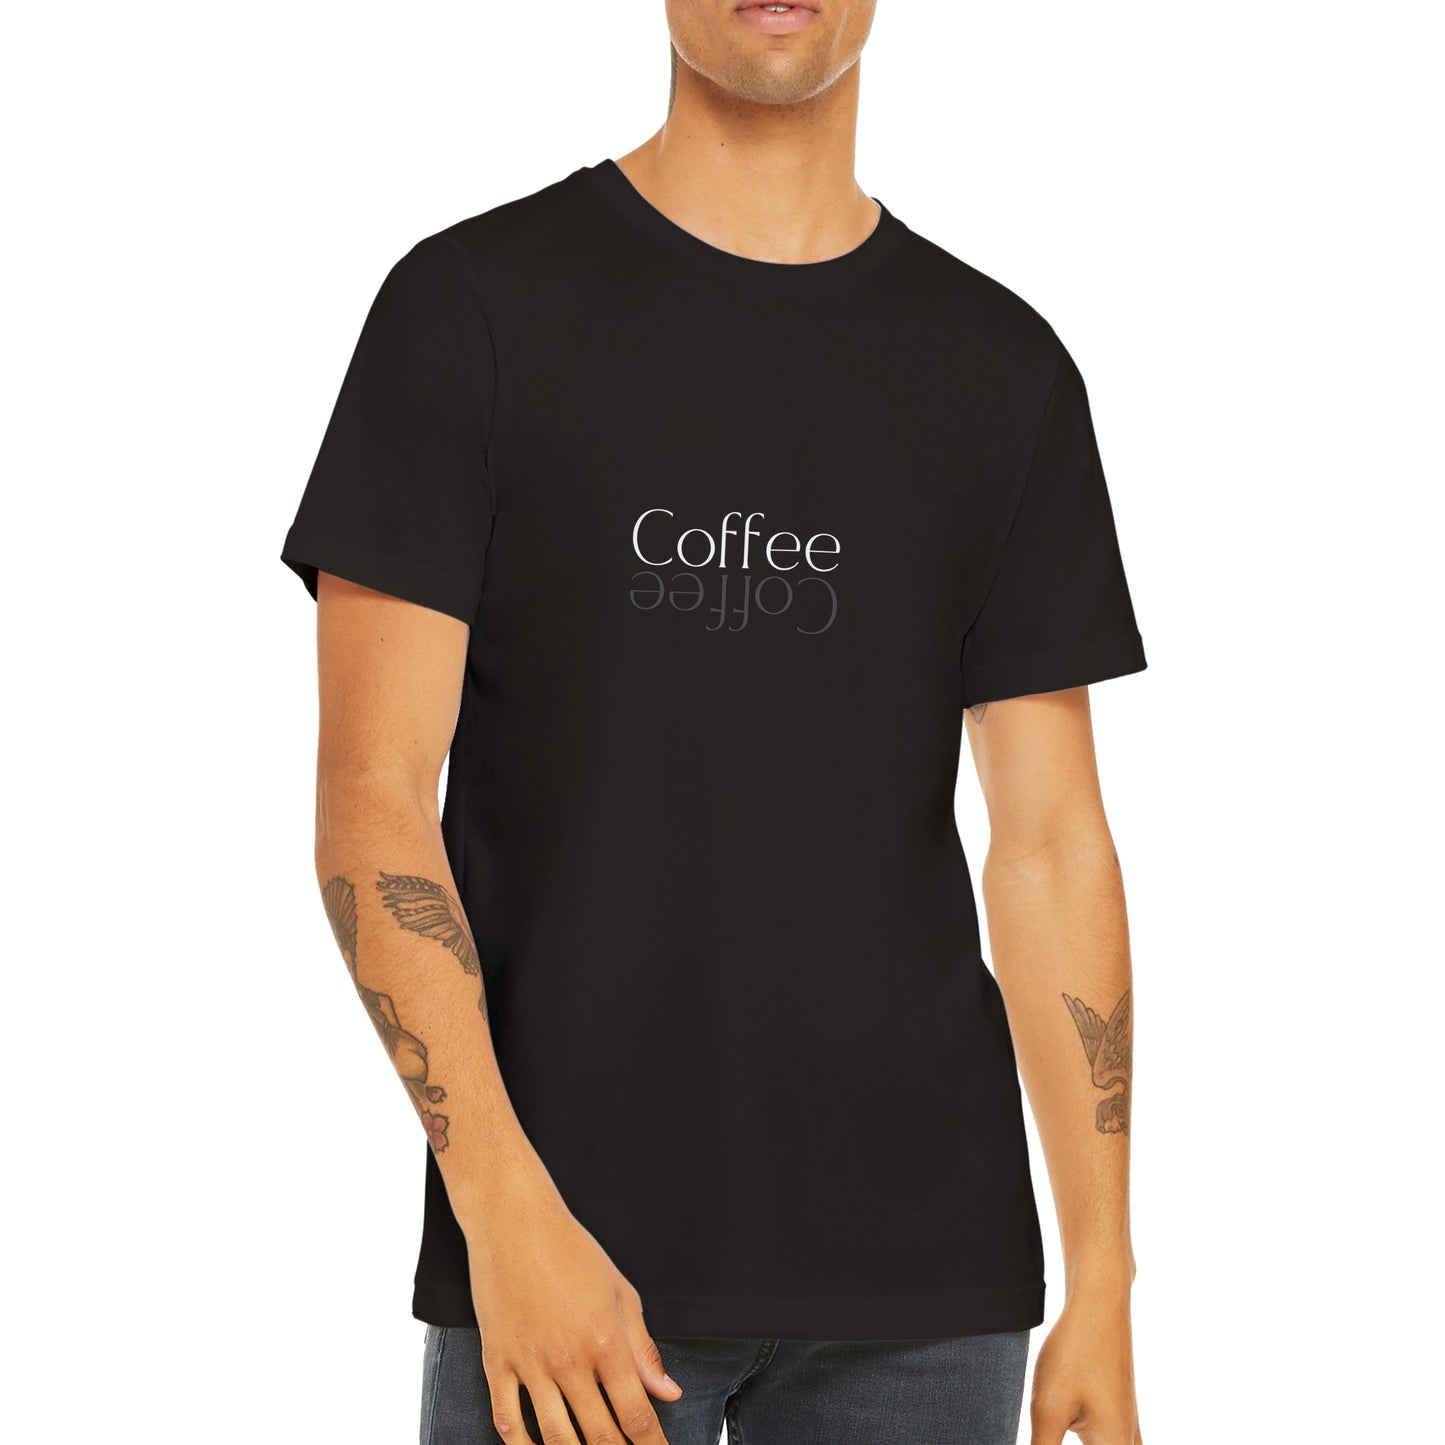 Premium Unisex "Coffee" T-shirt